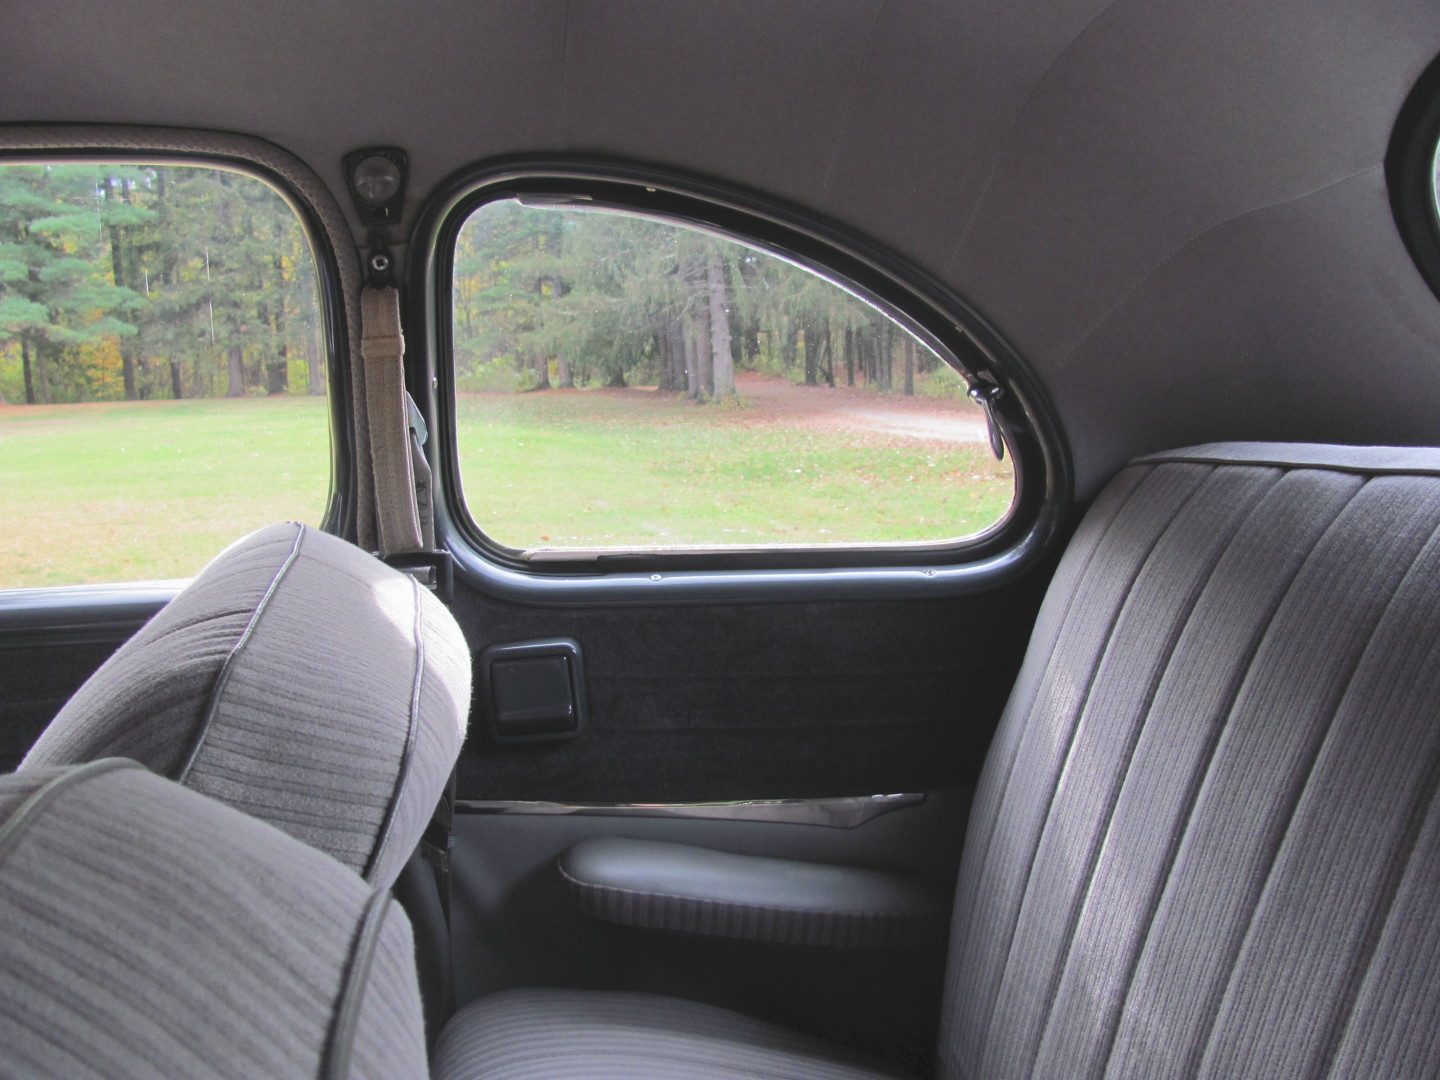 1947 Ford Long Door Sedan Coupe | Custom Auto Builds | Gallery